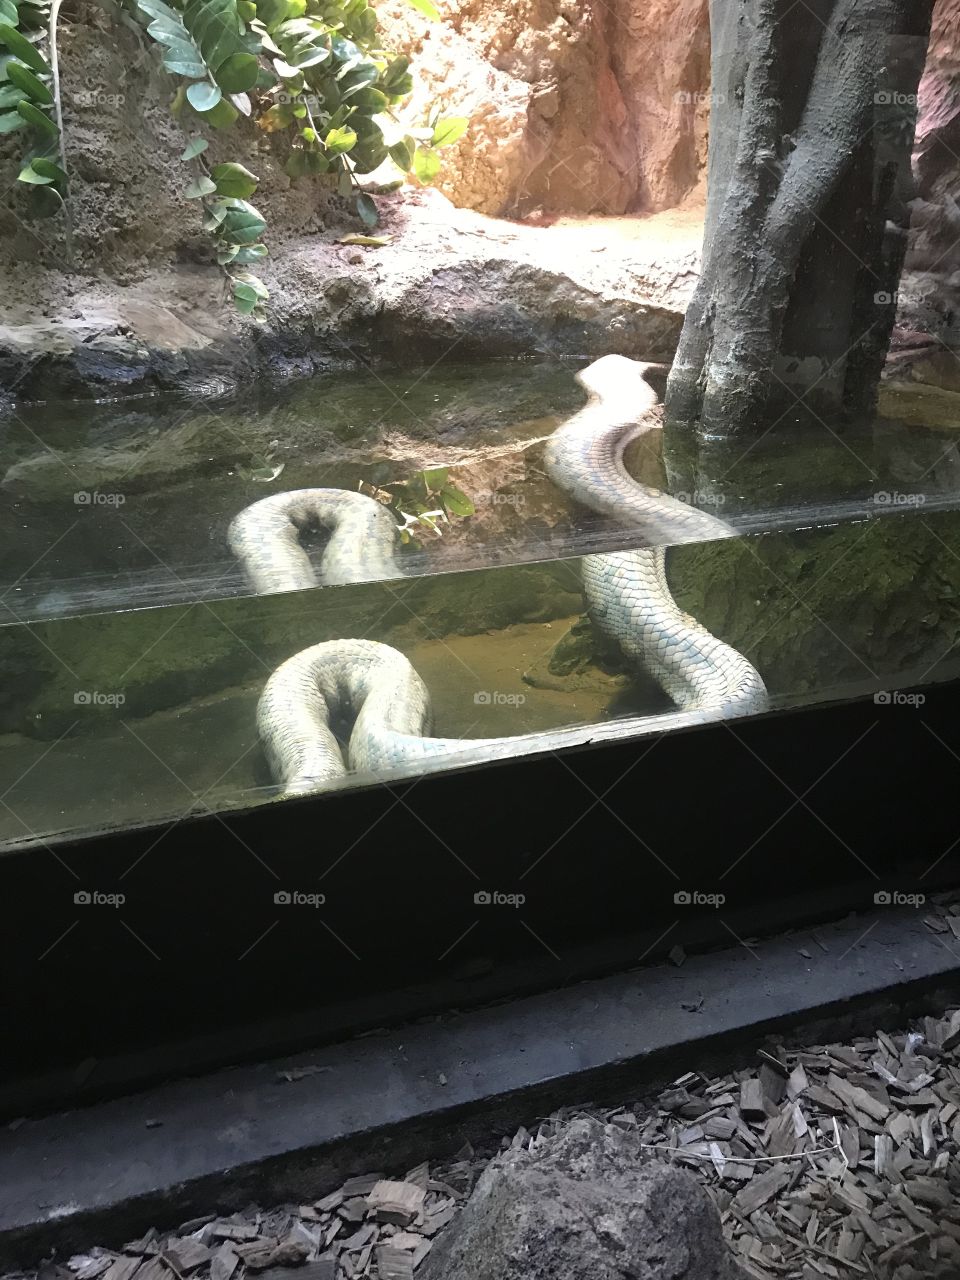 Anaconda at the zoo